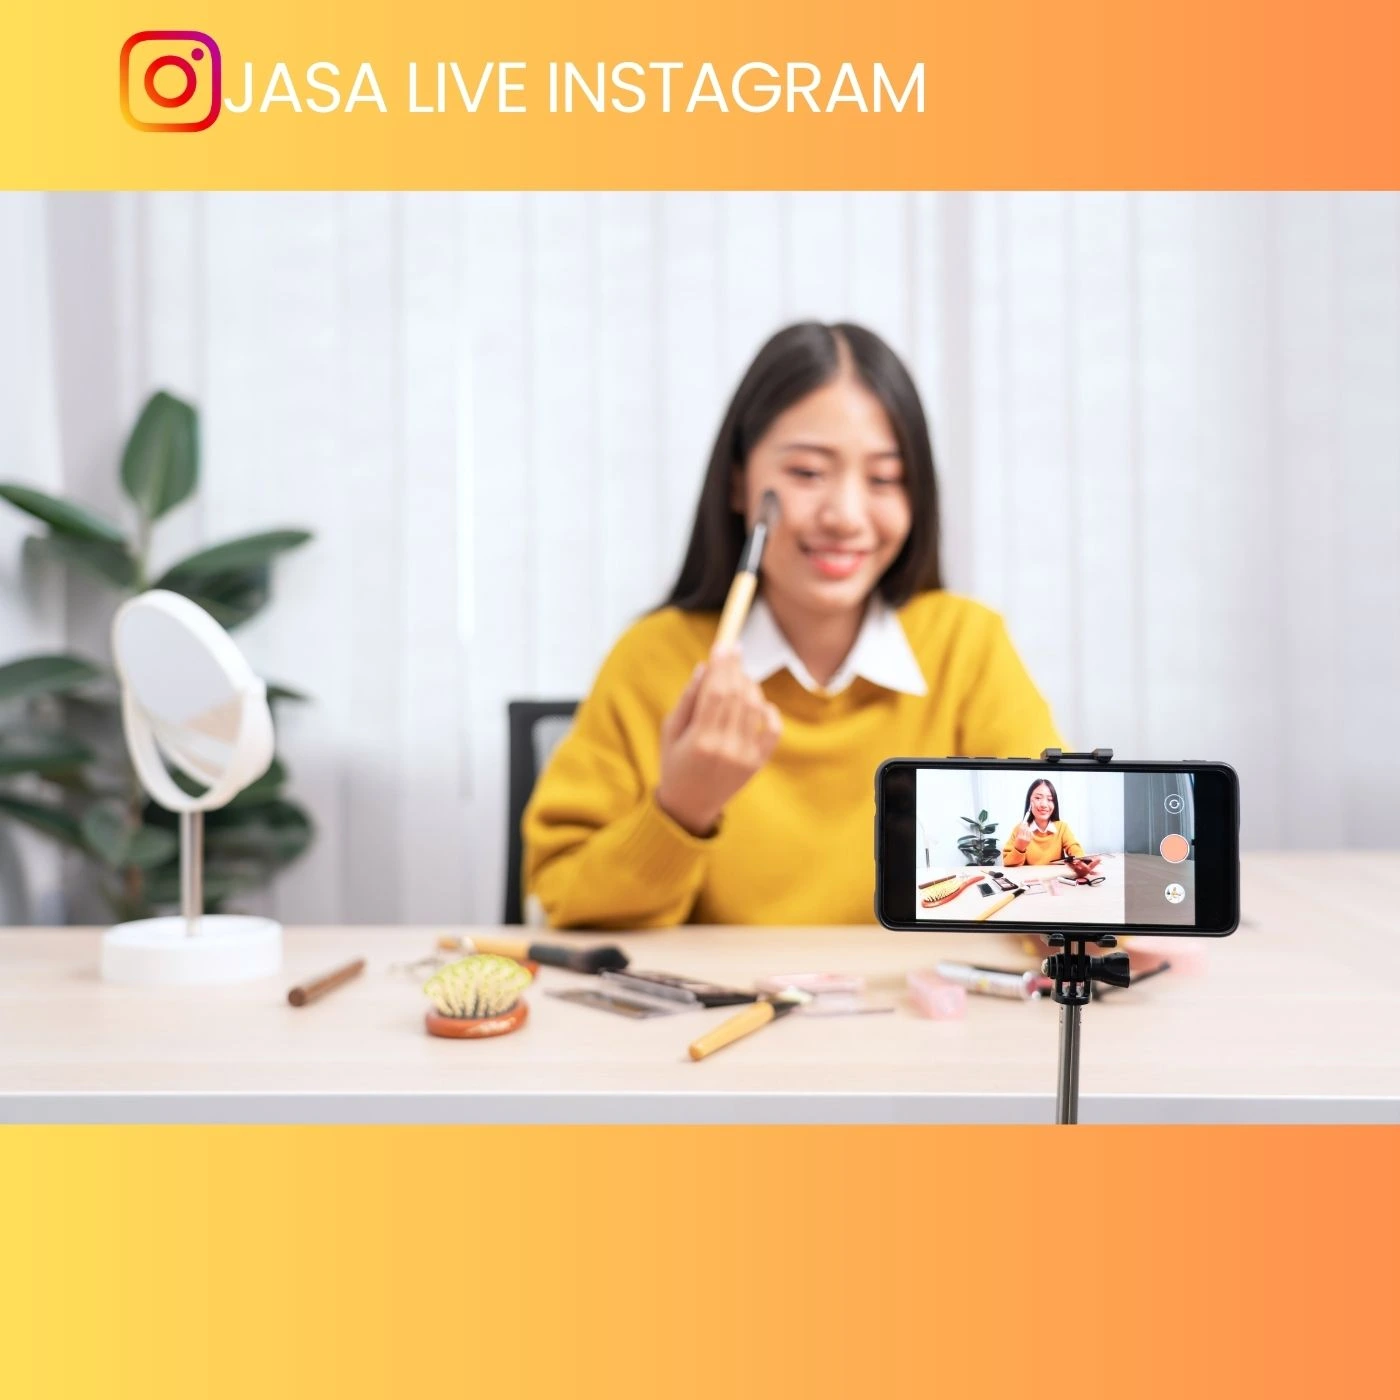 Pengertian Jasa Live Instagram